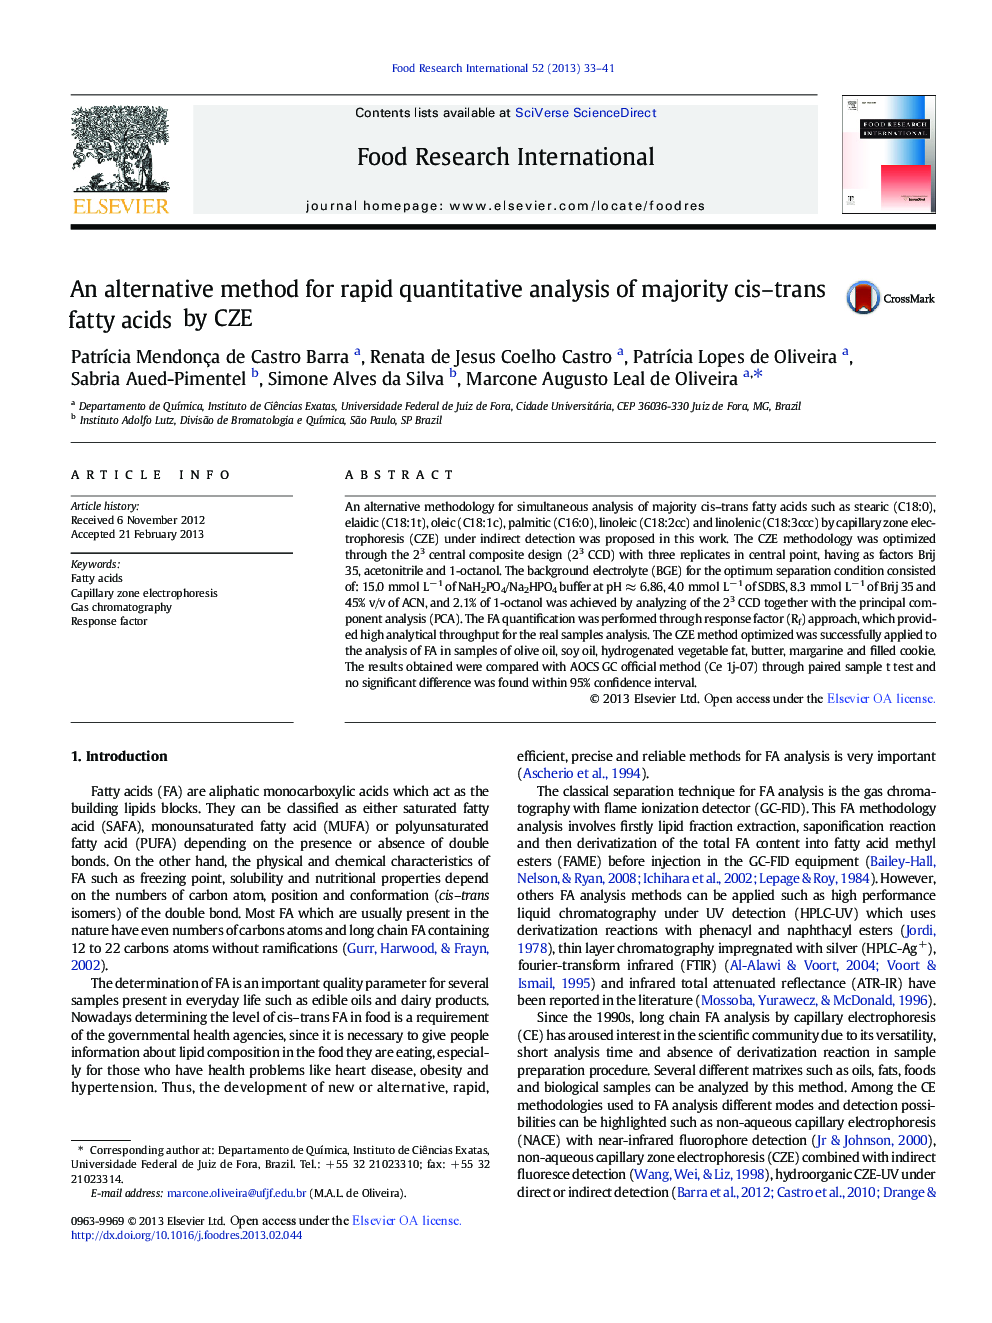 An alternative method for rapid quantitative analysis of majority cis-trans fatty acids by CZE